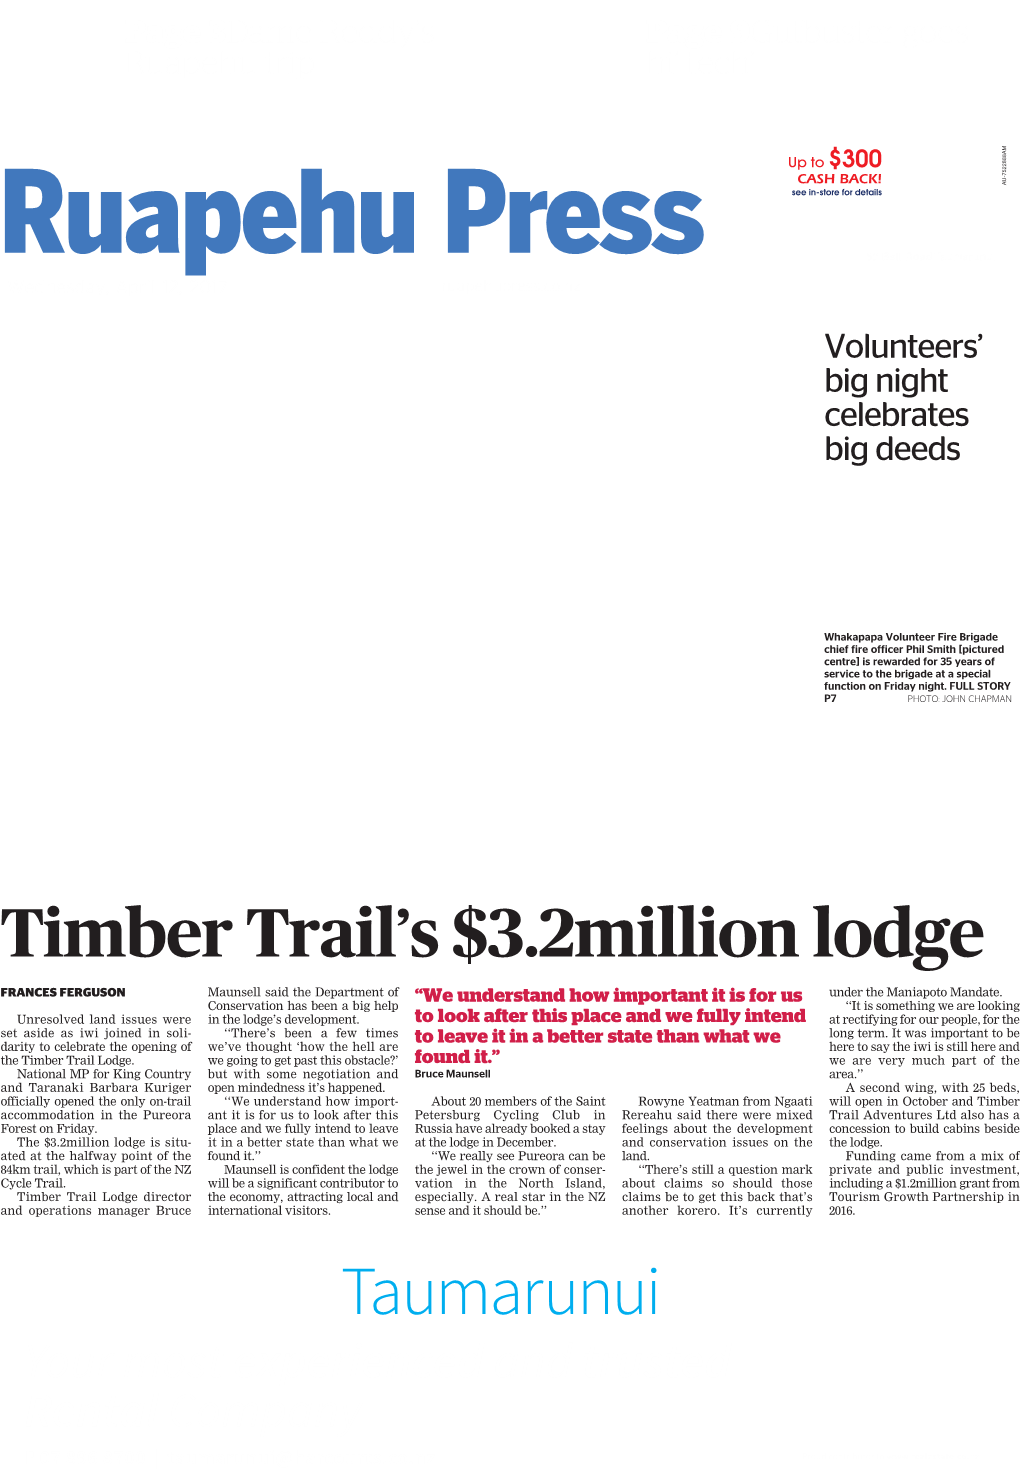 Taumarunui Timber Trail's $3.2Million Lodge